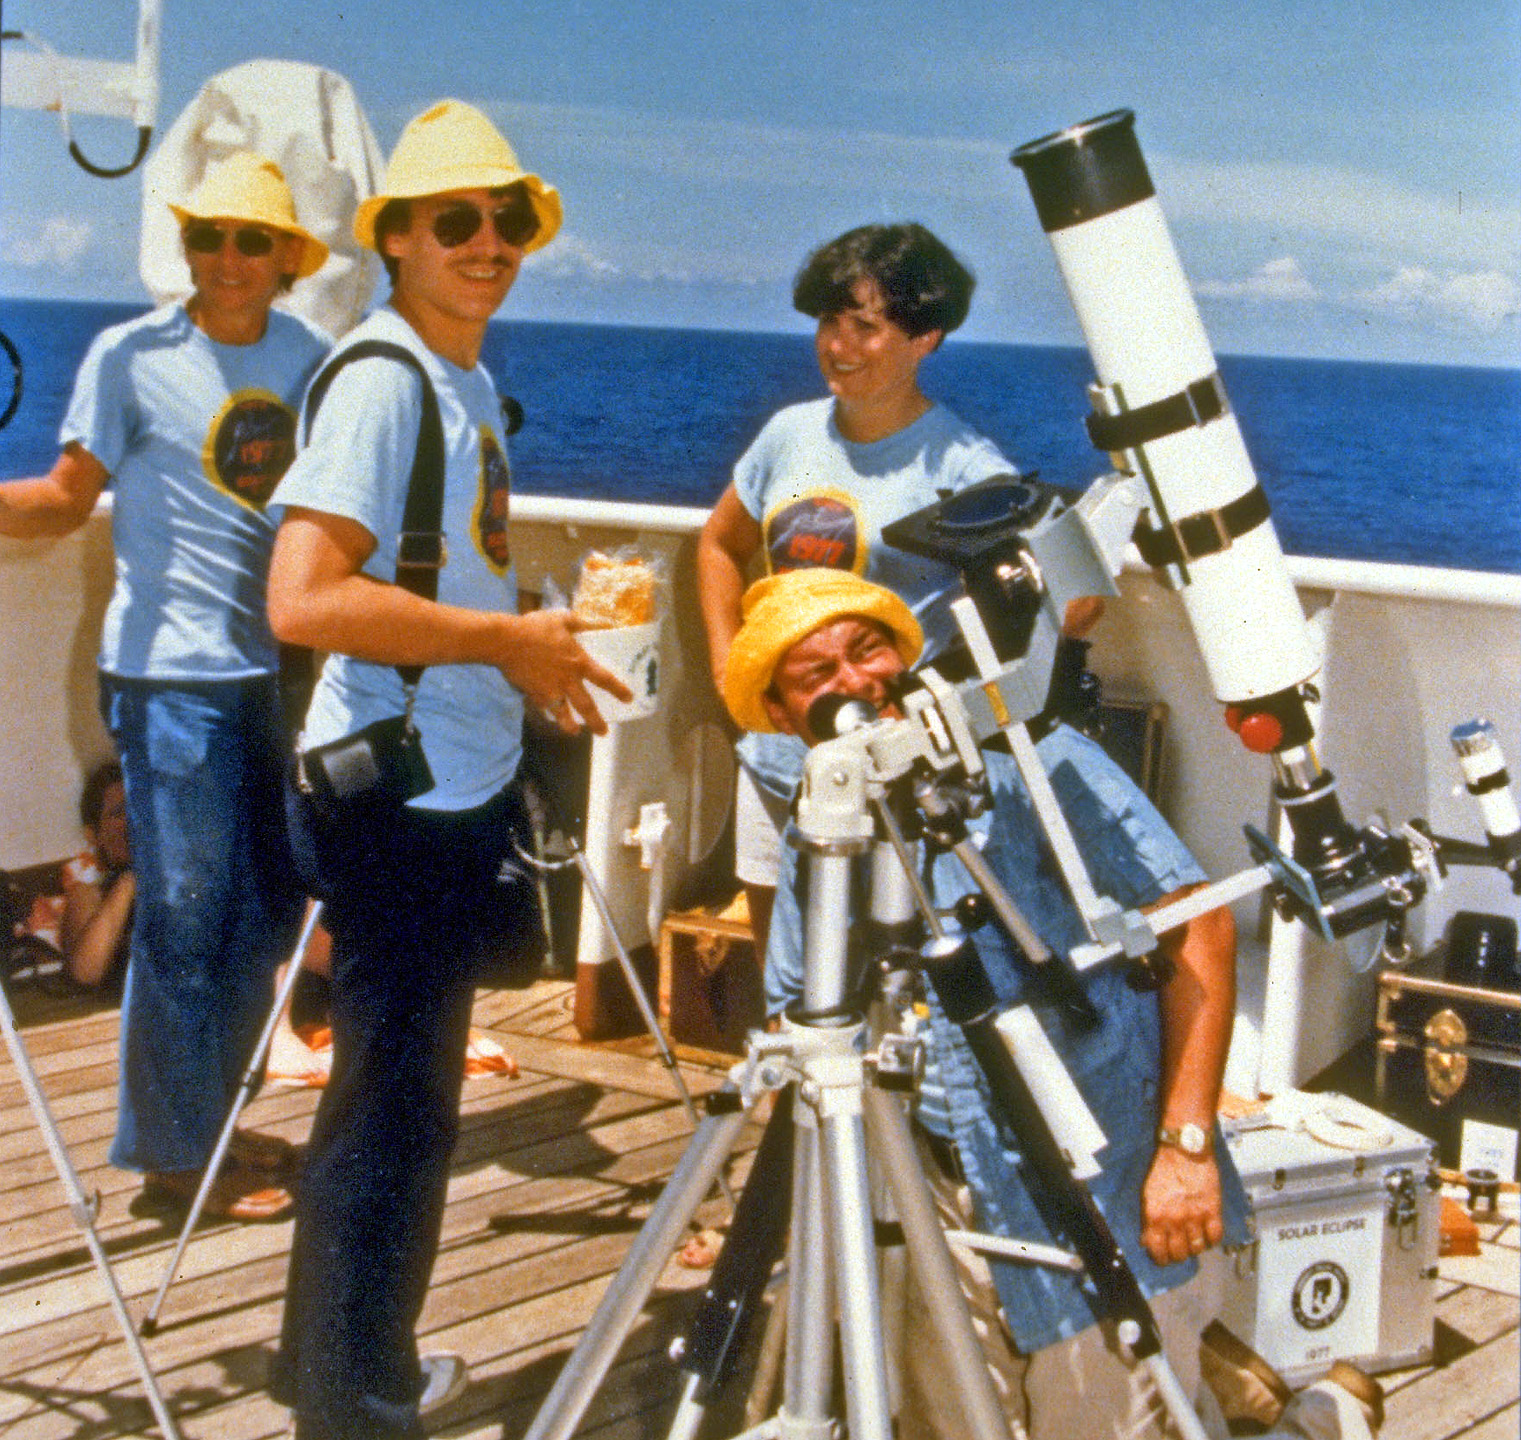 Eclipse 1977 - A38 - Paul Setting up Telescope